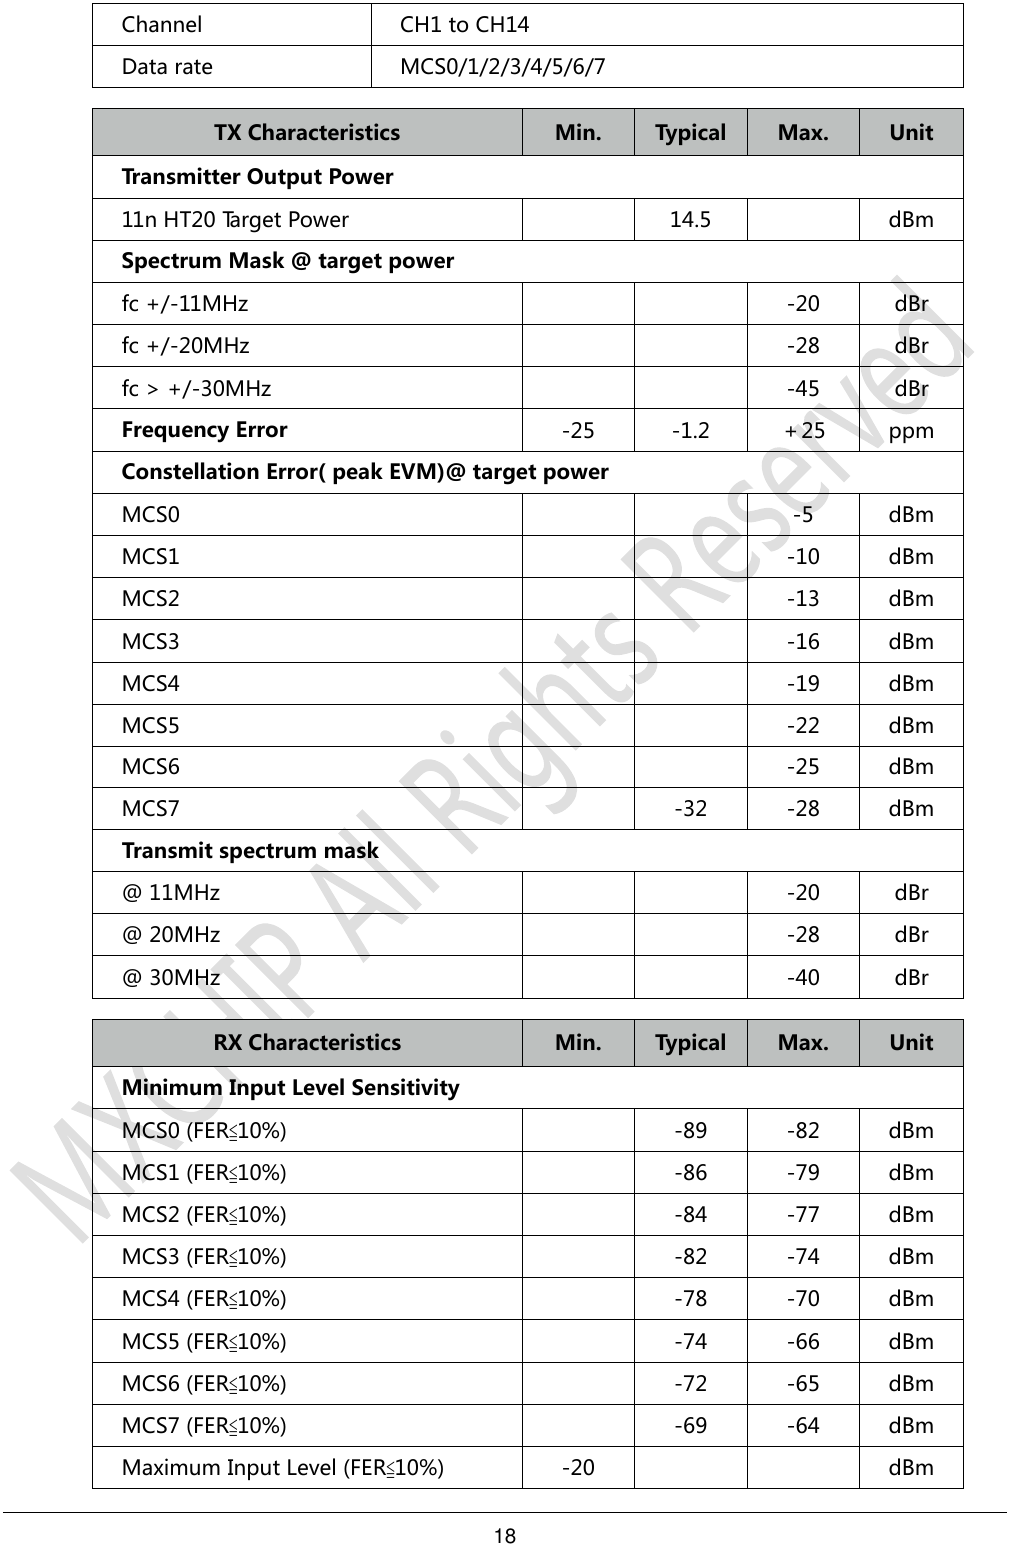 18     Channel CH1 to CH14 Data rate MCS0/1/2/3/4/5/6/7  TX Characteristics Min. Typical Max. Unit Transmitter Output Power 11n HT20 Target Power  14.5  dBm Spectrum Mask @ target power fc +/-11MHz   -20 dBr fc +/-20MHz   -28 dBr fc &gt; +/-30MHz   -45 dBr Frequency Error -25 -1.2 ＋25 ppm Constellation Error( peak EVM)@ target power MCS0   -5 dBm MCS1   -10 dBm MCS2   -13 dBm MCS3   -16 dBm MCS4   -19 dBm MCS5   -22 dBm MCS6   -25 dBm MCS7  -32 -28 dBm Transmit spectrum mask @ 11MHz   -20 dBr @ 20MHz   -28 dBr @ 30MHz   -40 dBr  RX Characteristics Min. Typical Max. Unit Minimum Input Level Sensitivity MCS0 (FER≦10%)  -89 -82 dBm MCS1 (FER≦10%)  -86 -79 dBm MCS2 (FER≦10%)  -84 -77 dBm MCS3 (FER≦10%)  -82 -74 dBm MCS4 (FER≦10%)  -78 -70 dBm MCS5 (FER≦10%)  -74 -66 dBm MCS6 (FER≦10%)  -72 -65 dBm MCS7 (FER≦10%)  -69 -64 dBm Maximum Input Level (FER≦10%) -20   dBm    